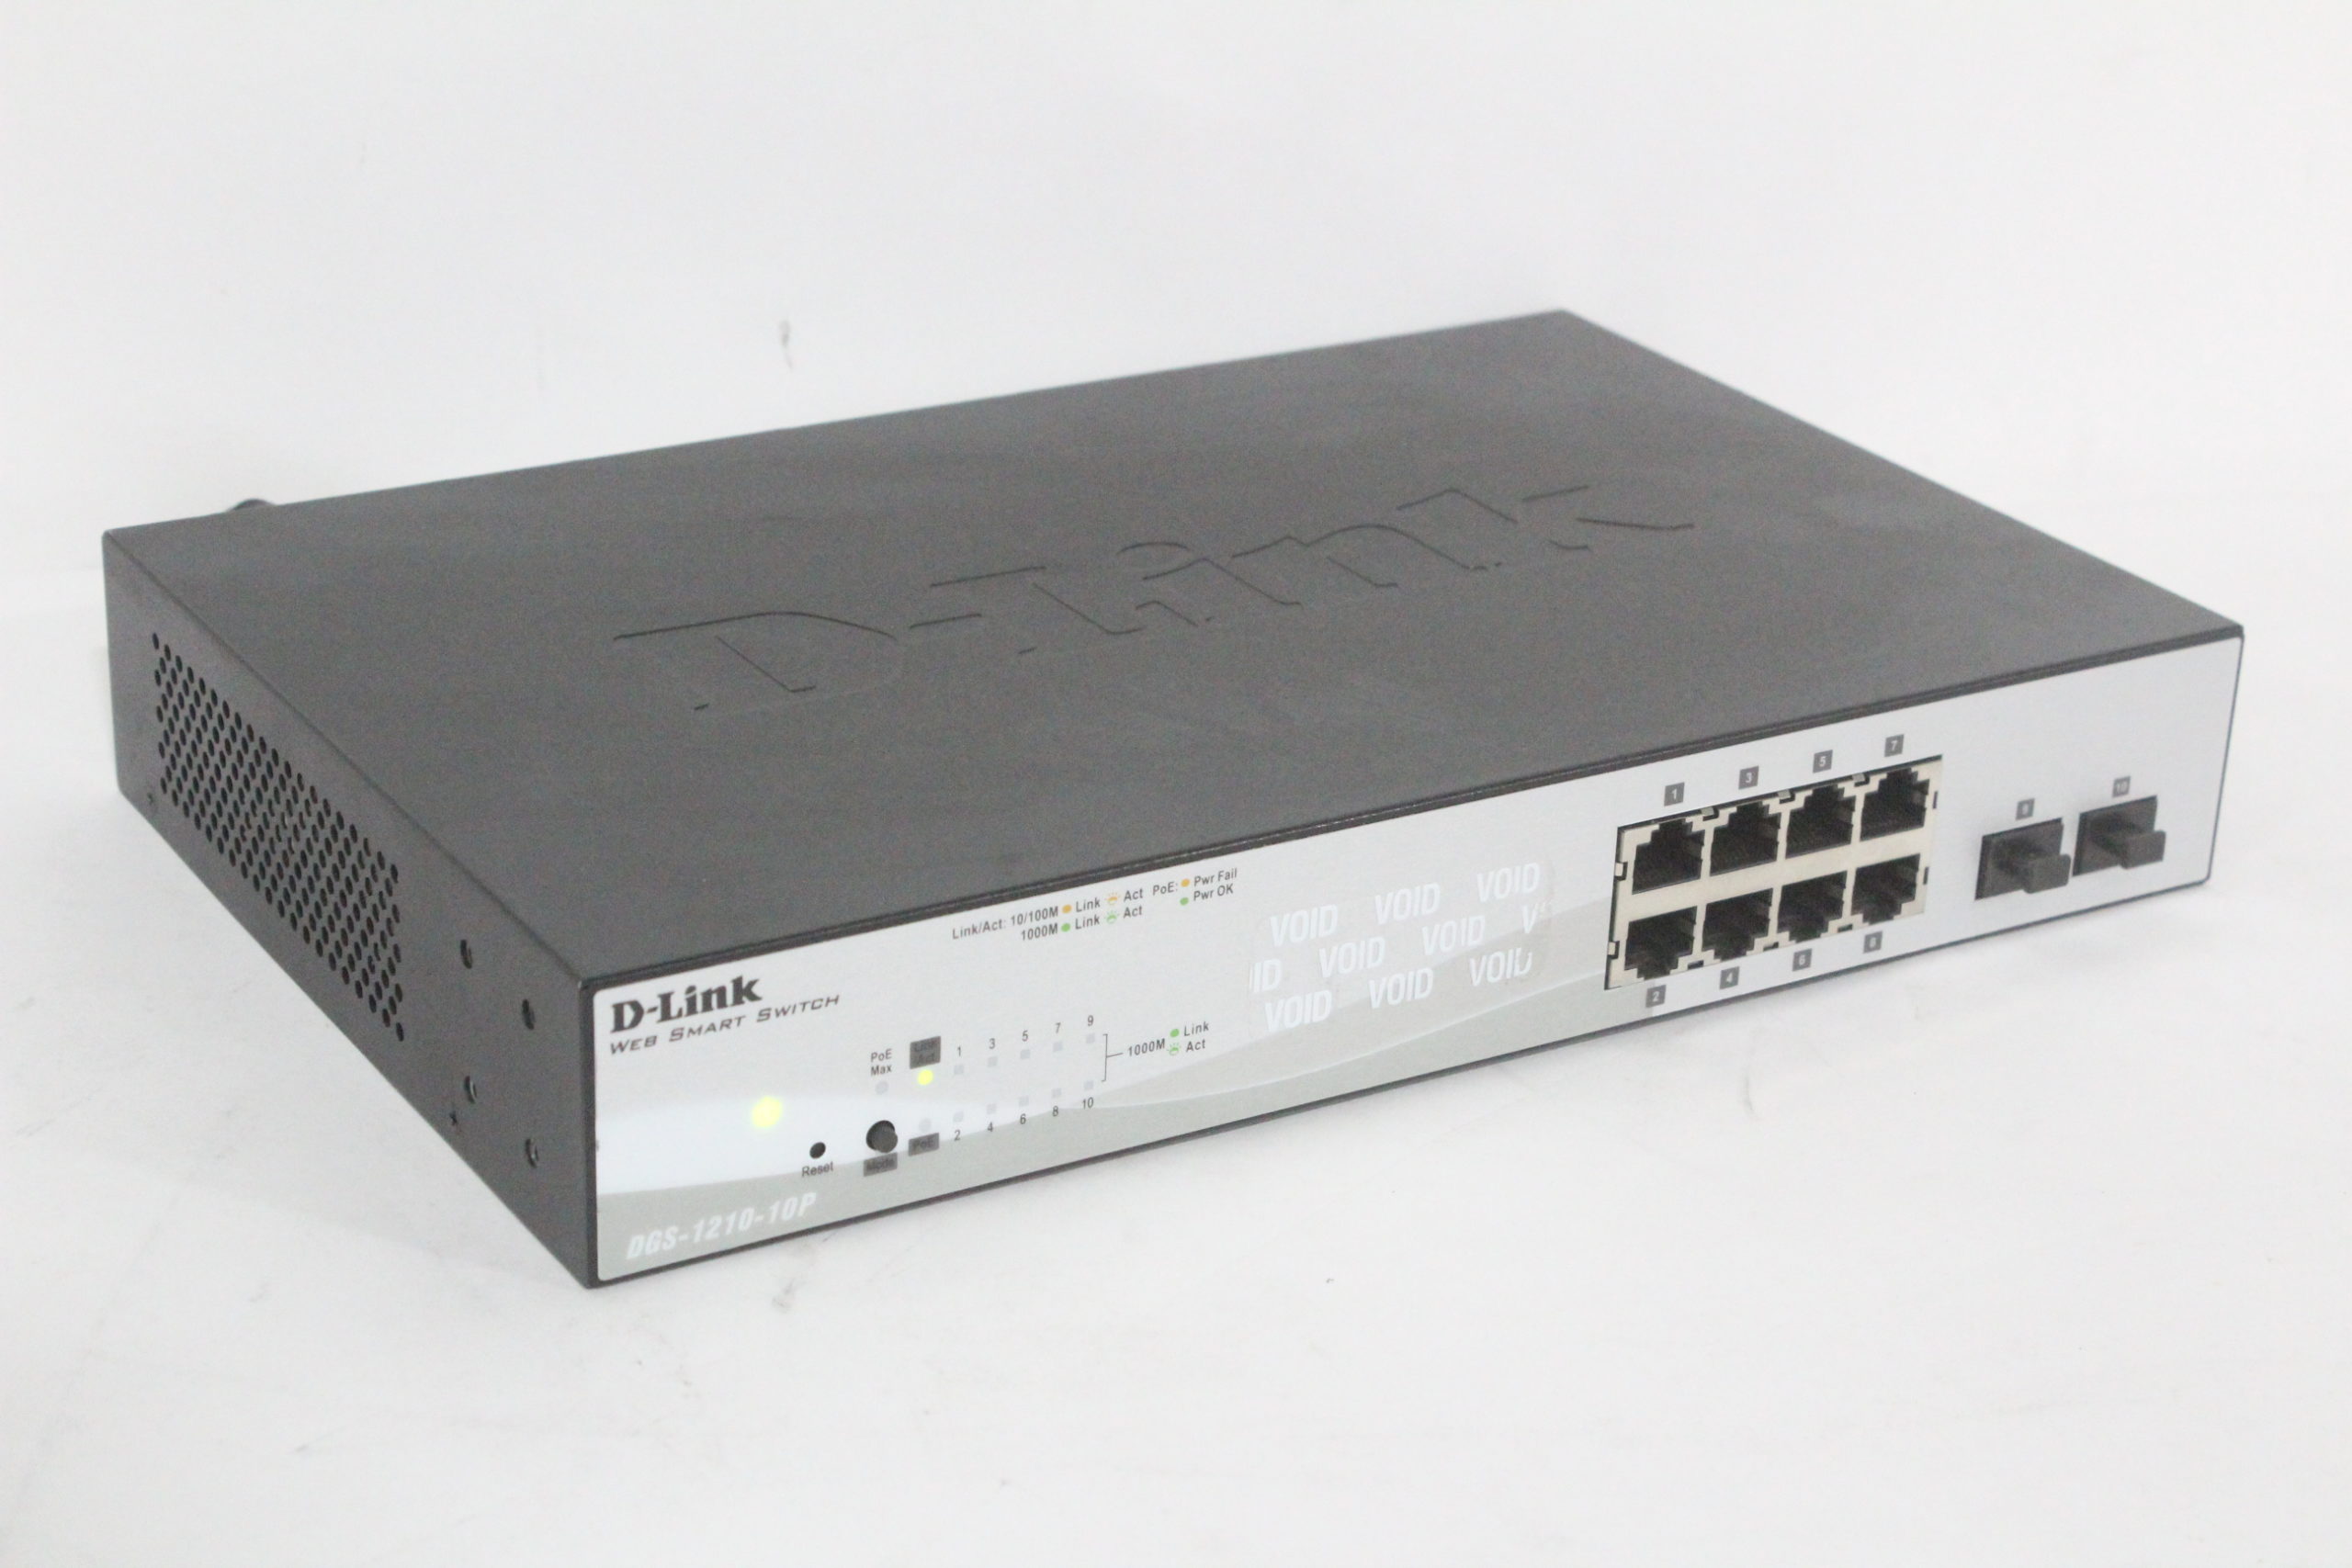 D-Link Web Smart DGS-1210-10P - switch - 10 ports - managed - DGS-1210-10P  - Ethernet Switches 